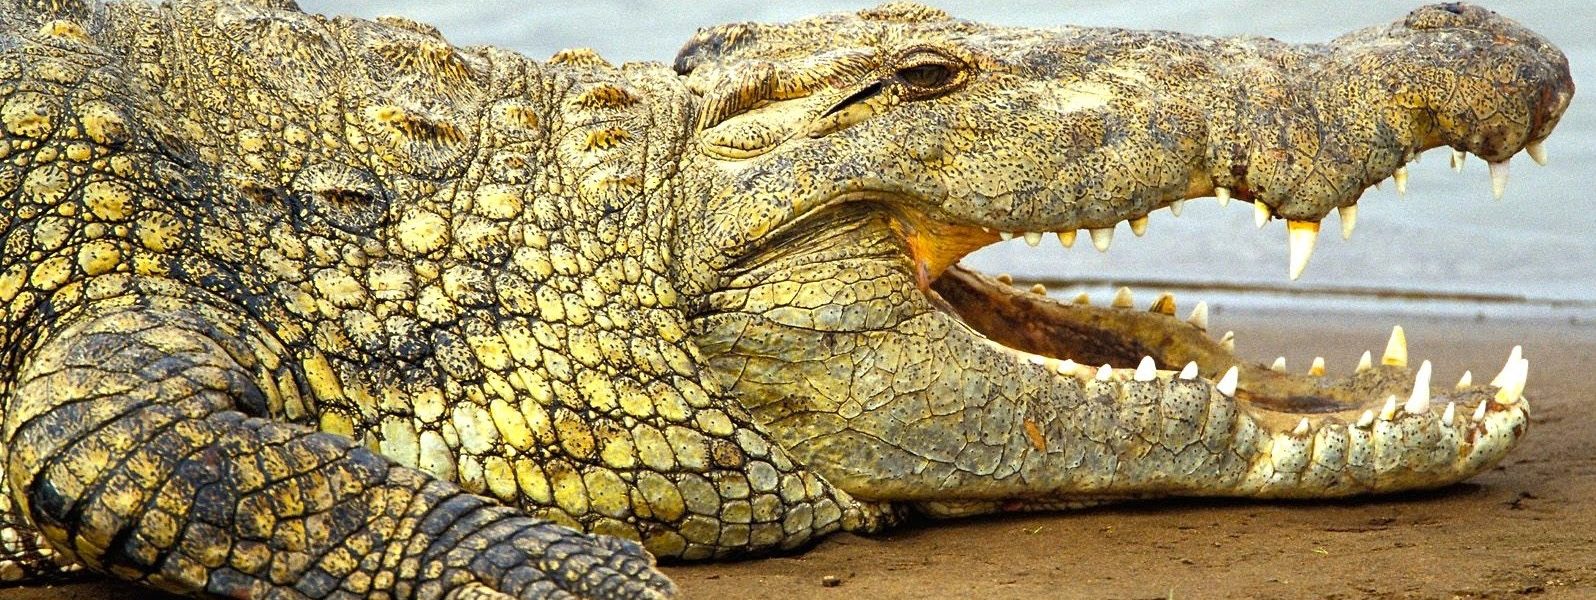 Reptile filming in Uganda - crocodile Filming